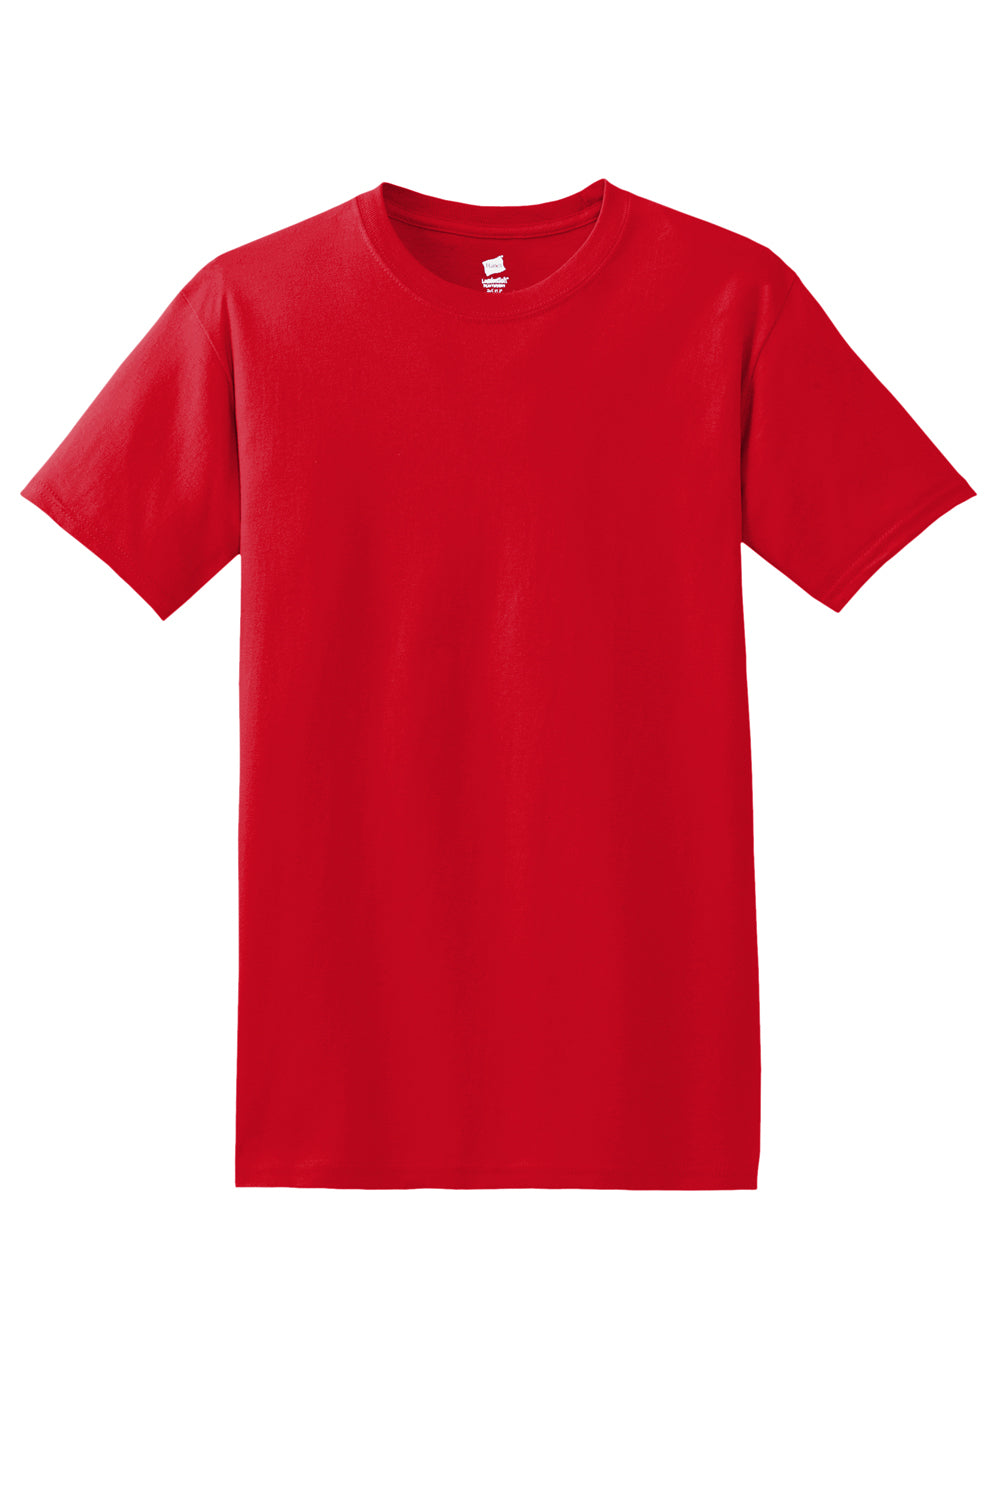 Hanes Mens ComfortSoft Short Sleeve Crewneck T-Shirt Athletic Red Flat Front